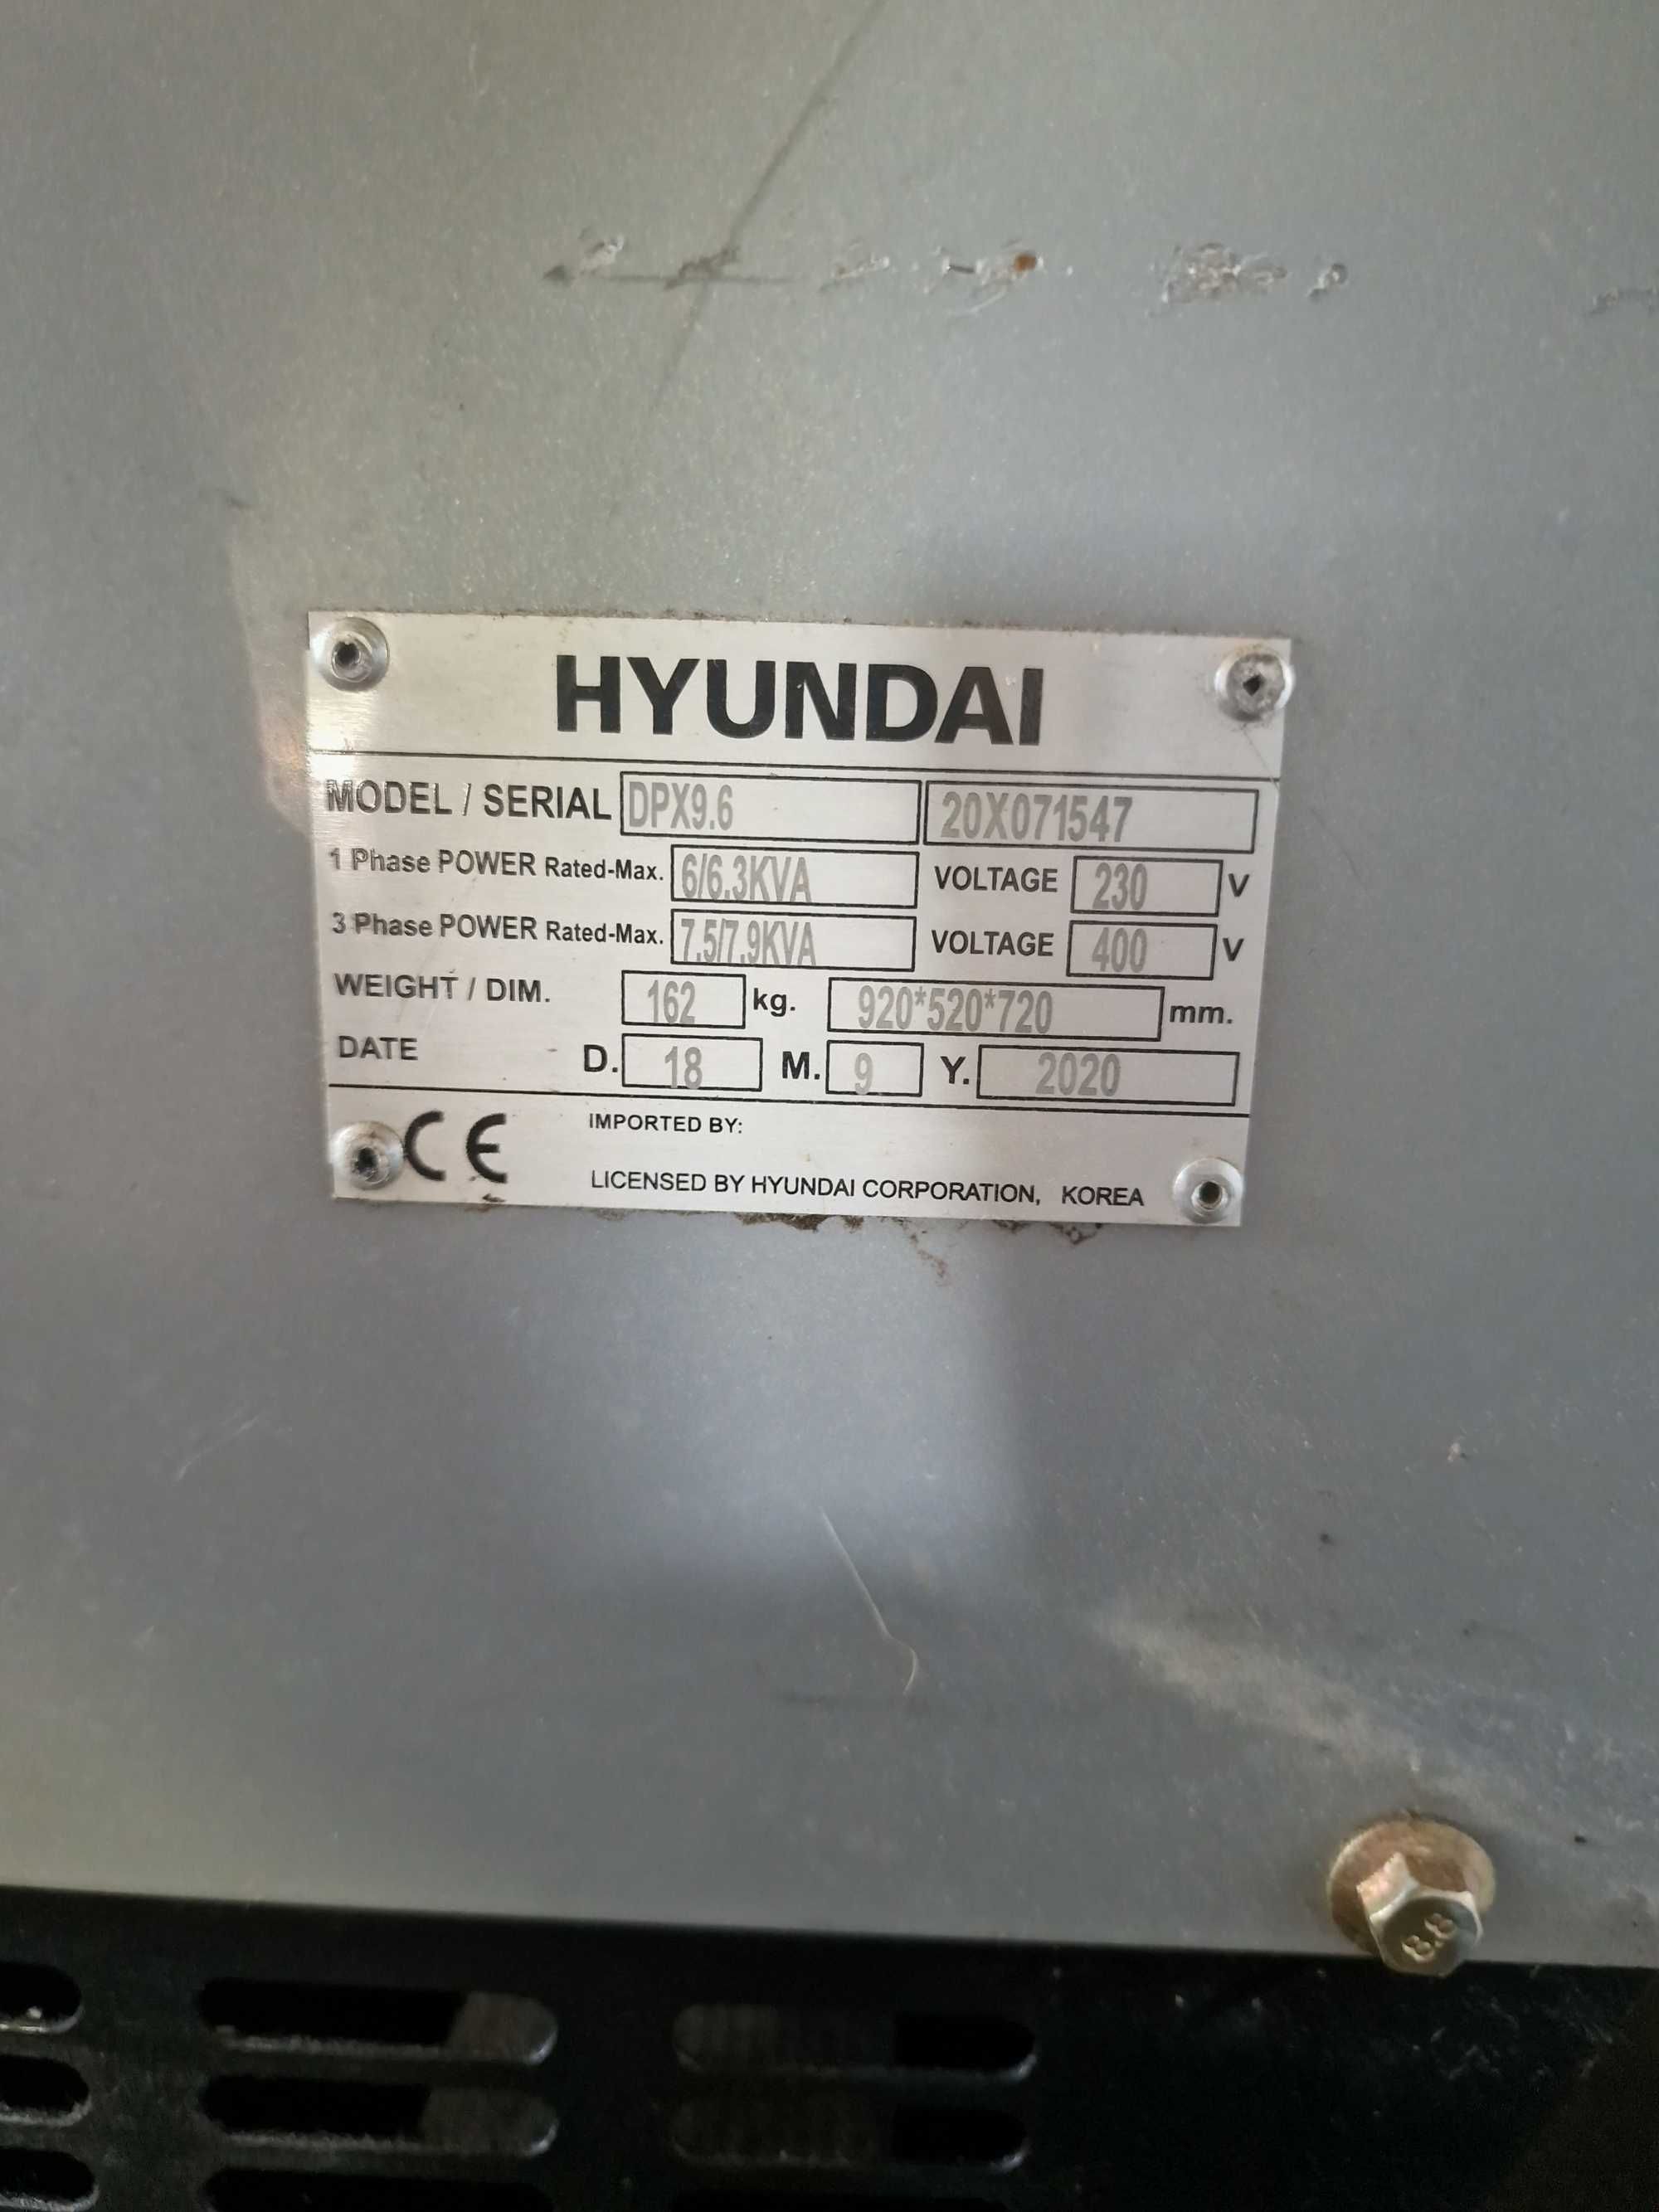 Generator Hyundai DPX9.6